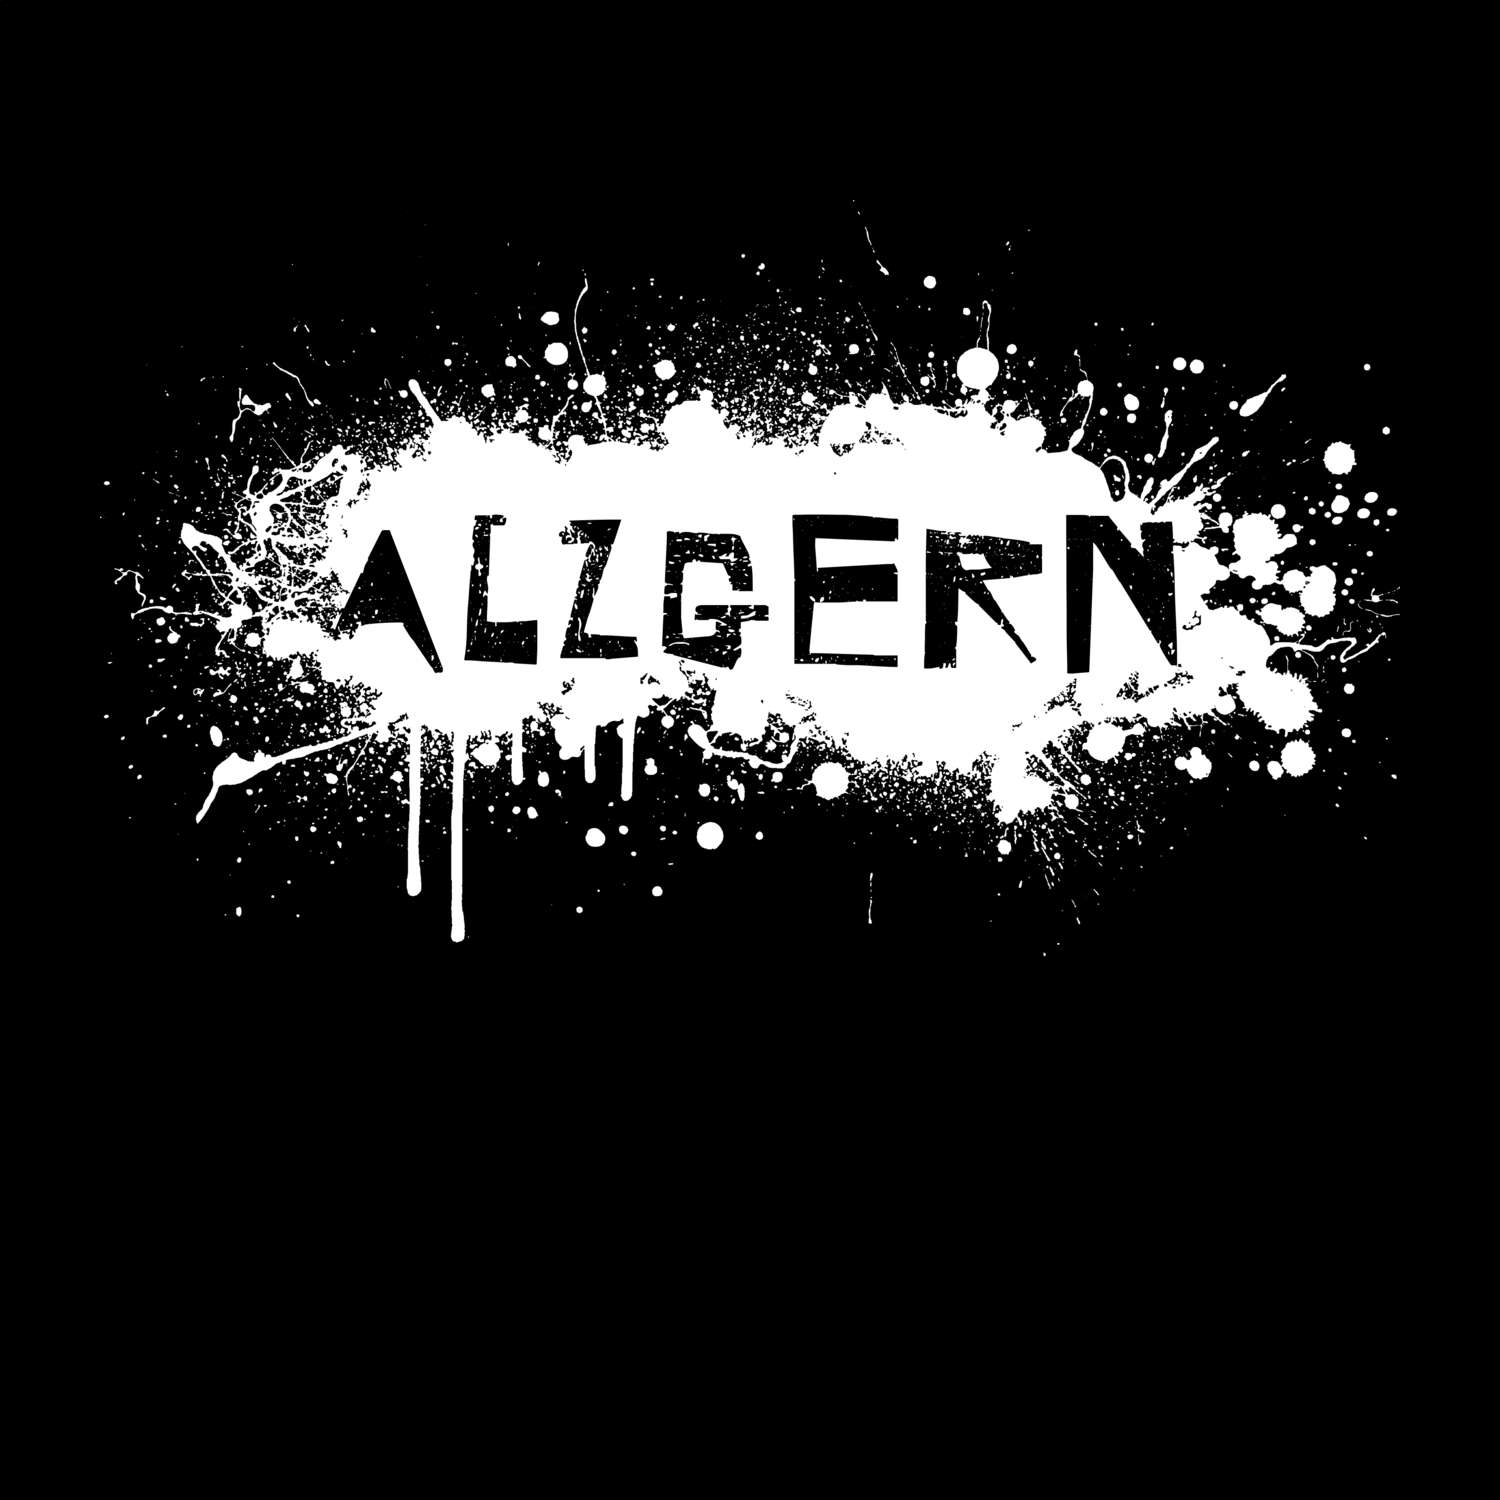 Alzgern T-Shirt »Paint Splash Punk«